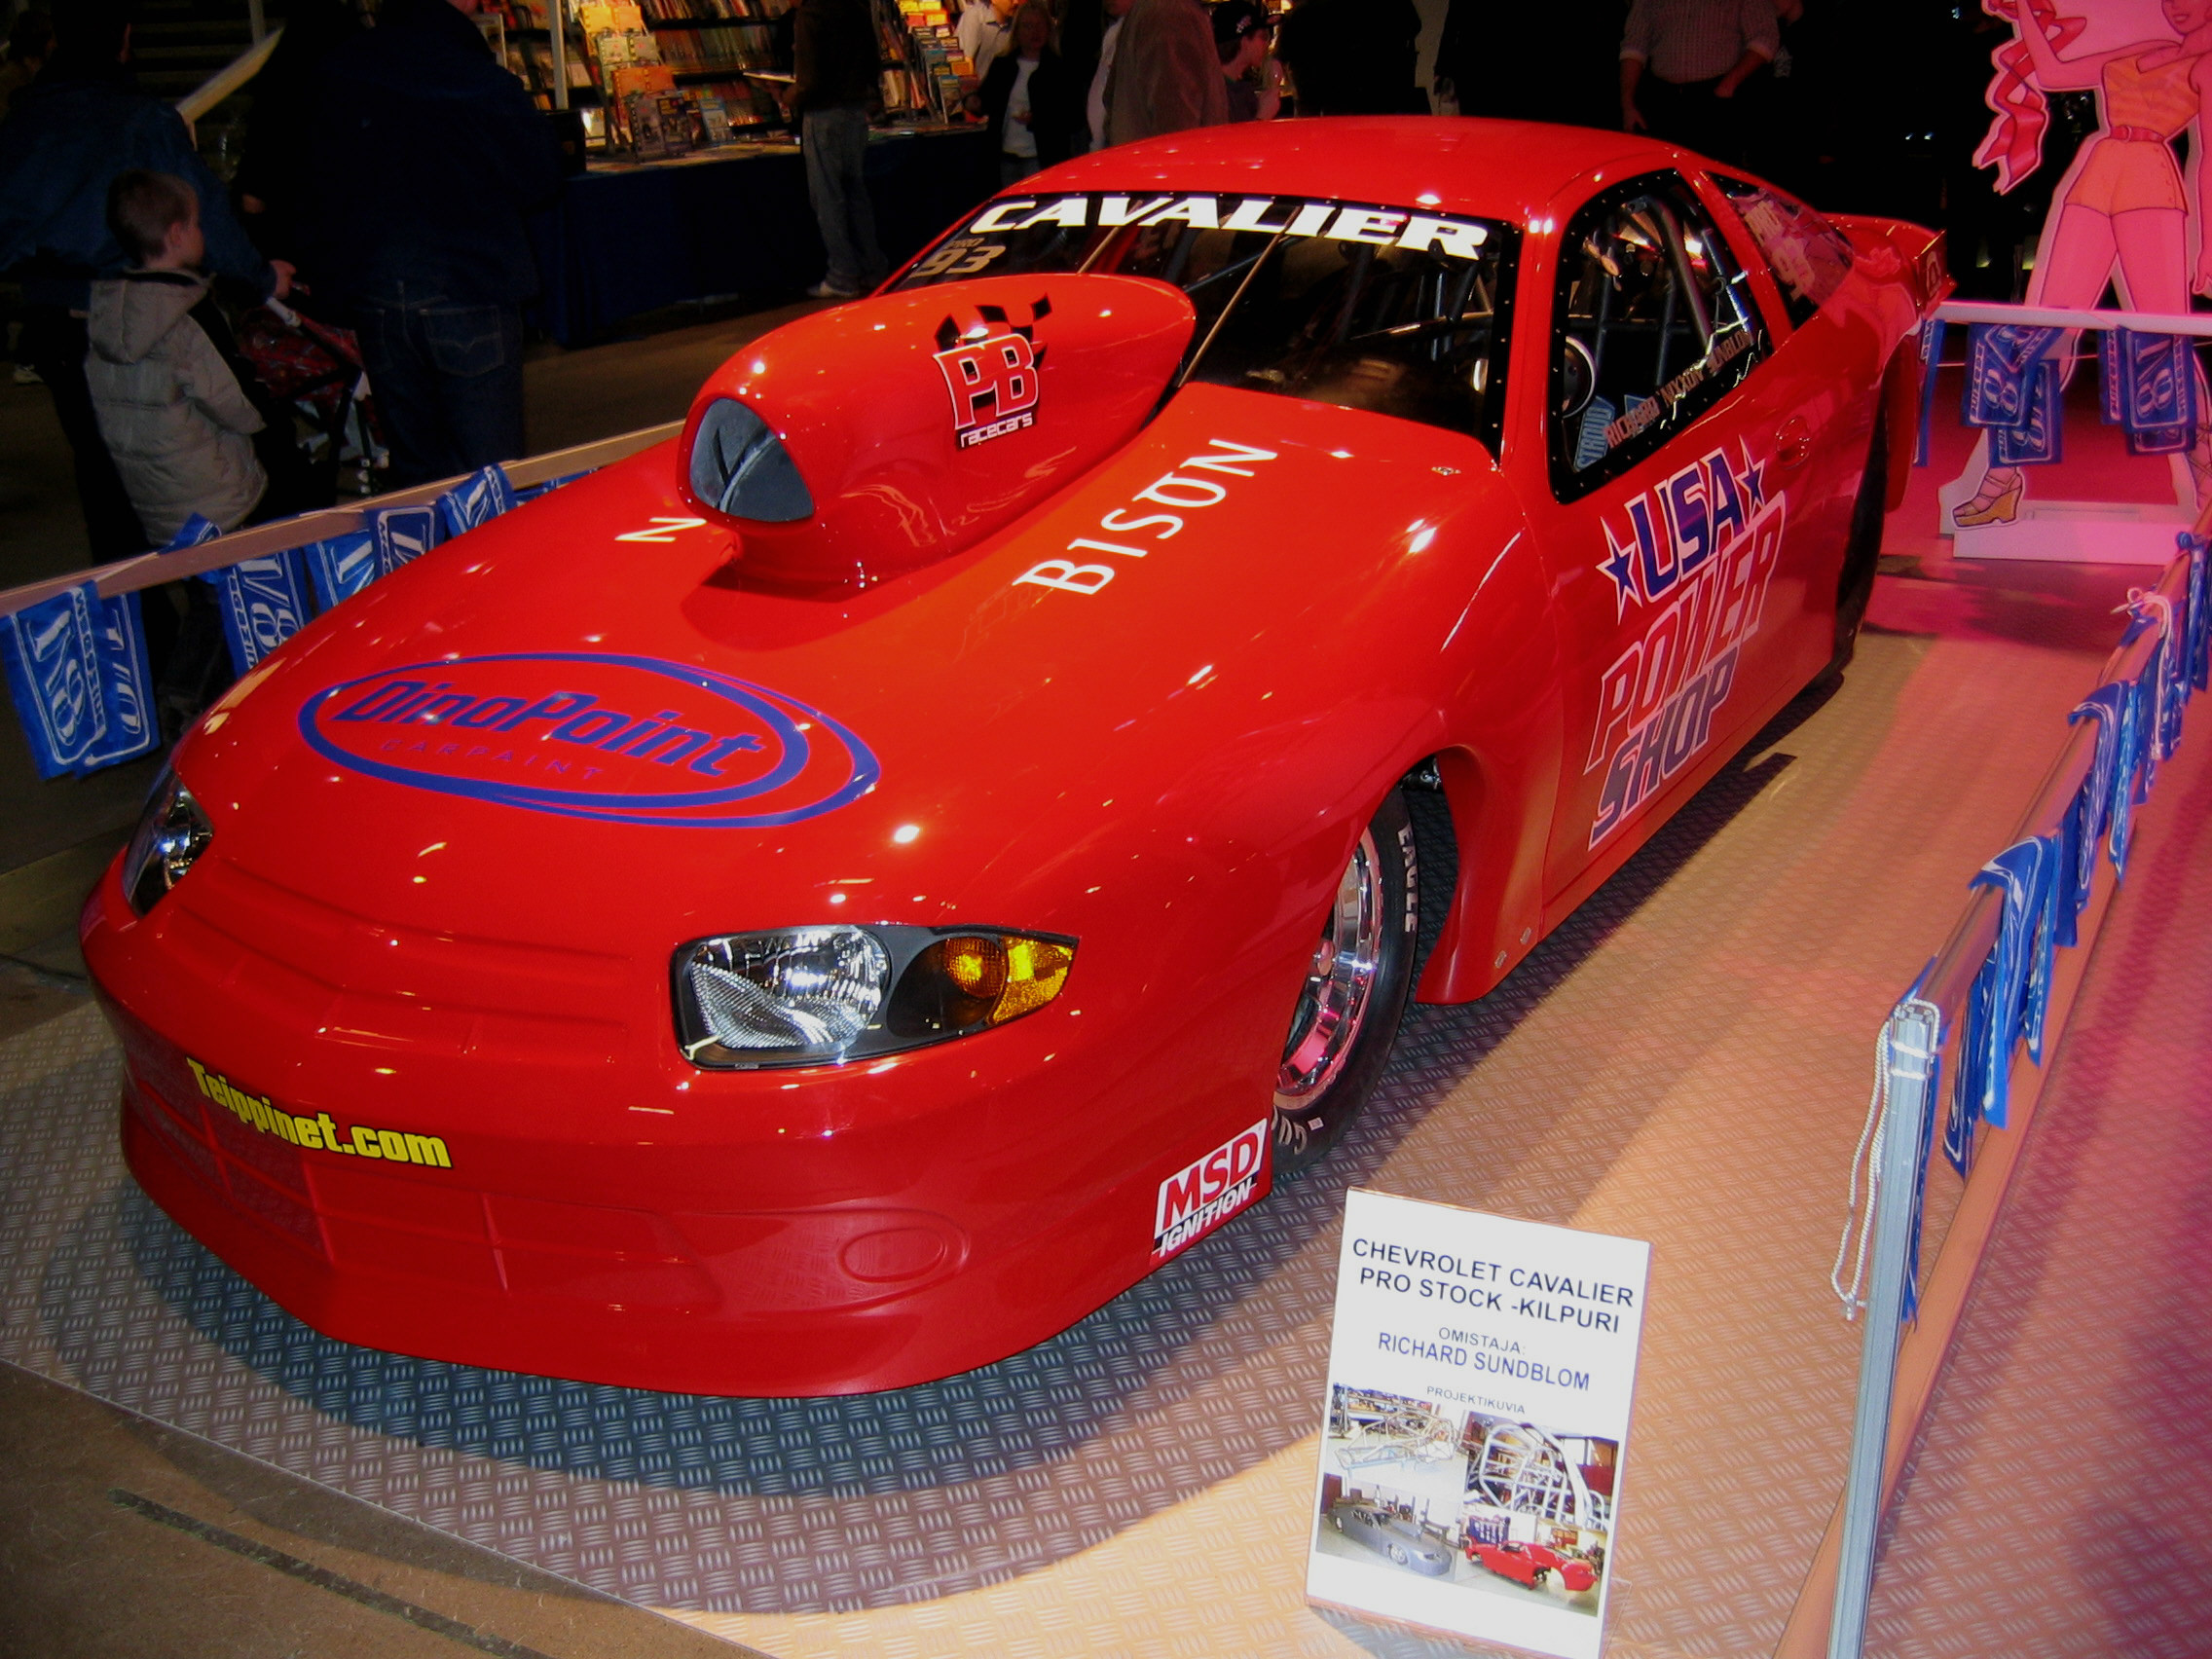 American Car Show 2005, Chevrolet Cavalier Pro Stock -kipuri Richard Sundblom